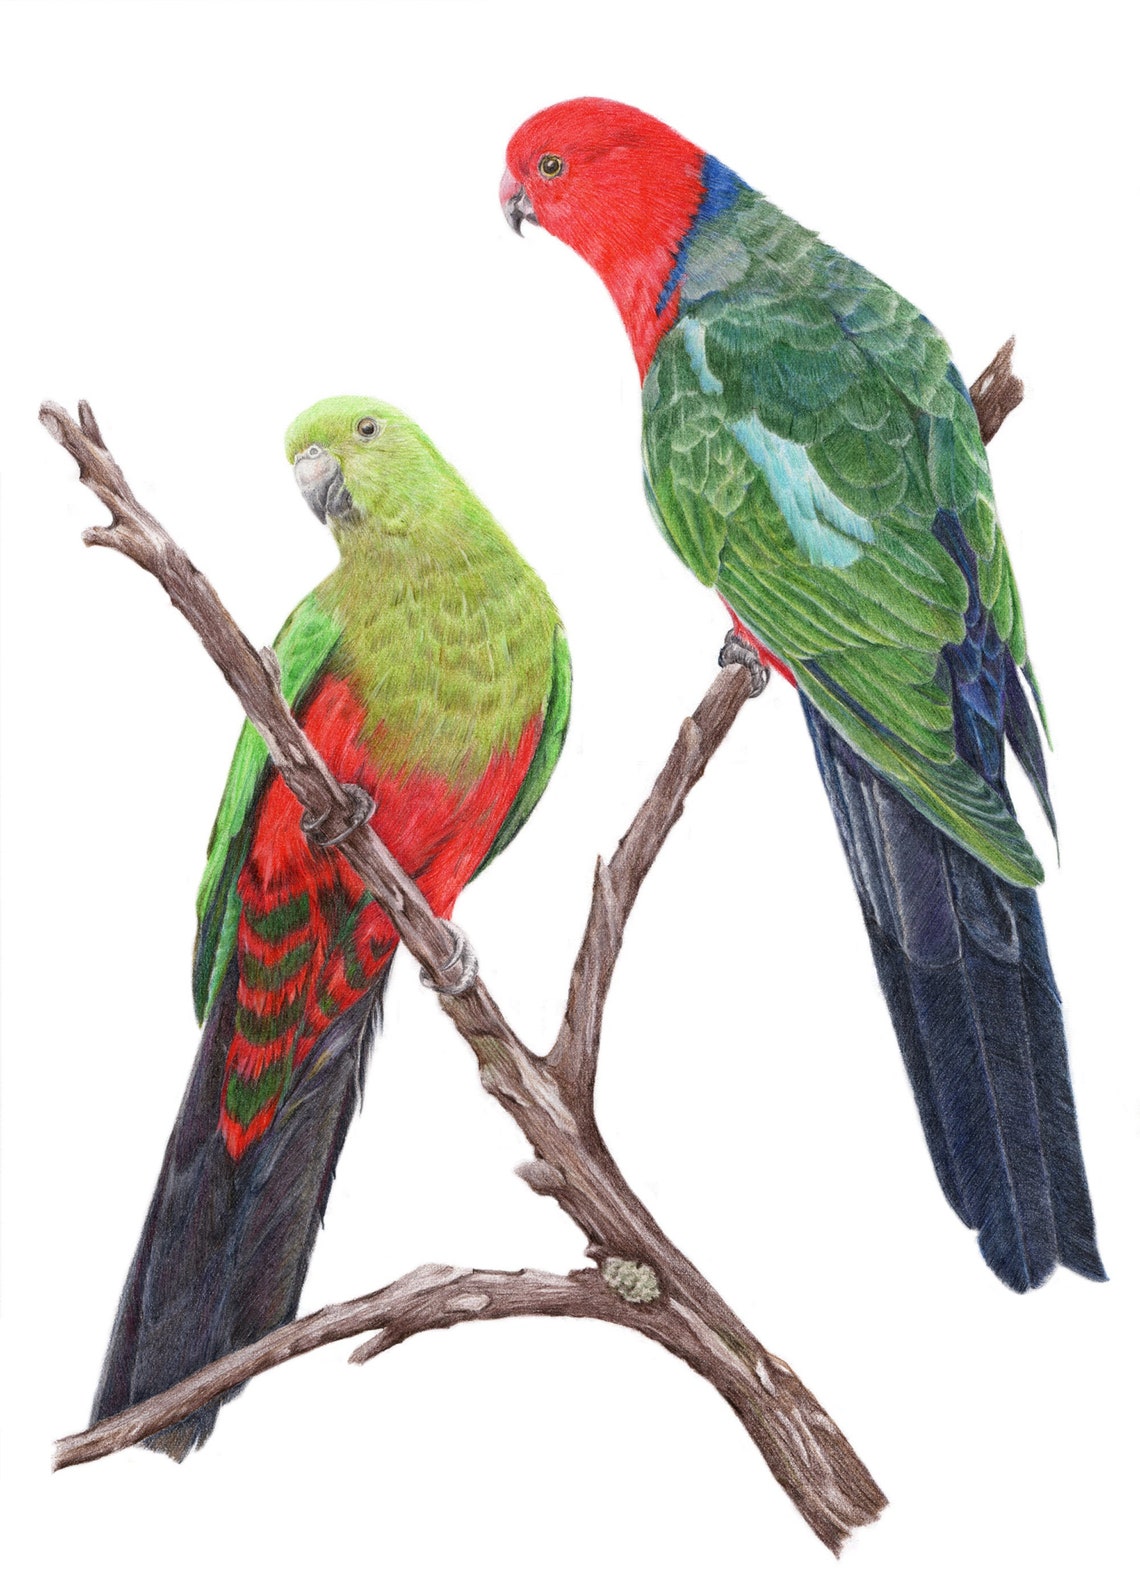 Australian King Parrots from Alison Dickin Botanical and Wildlife Artist